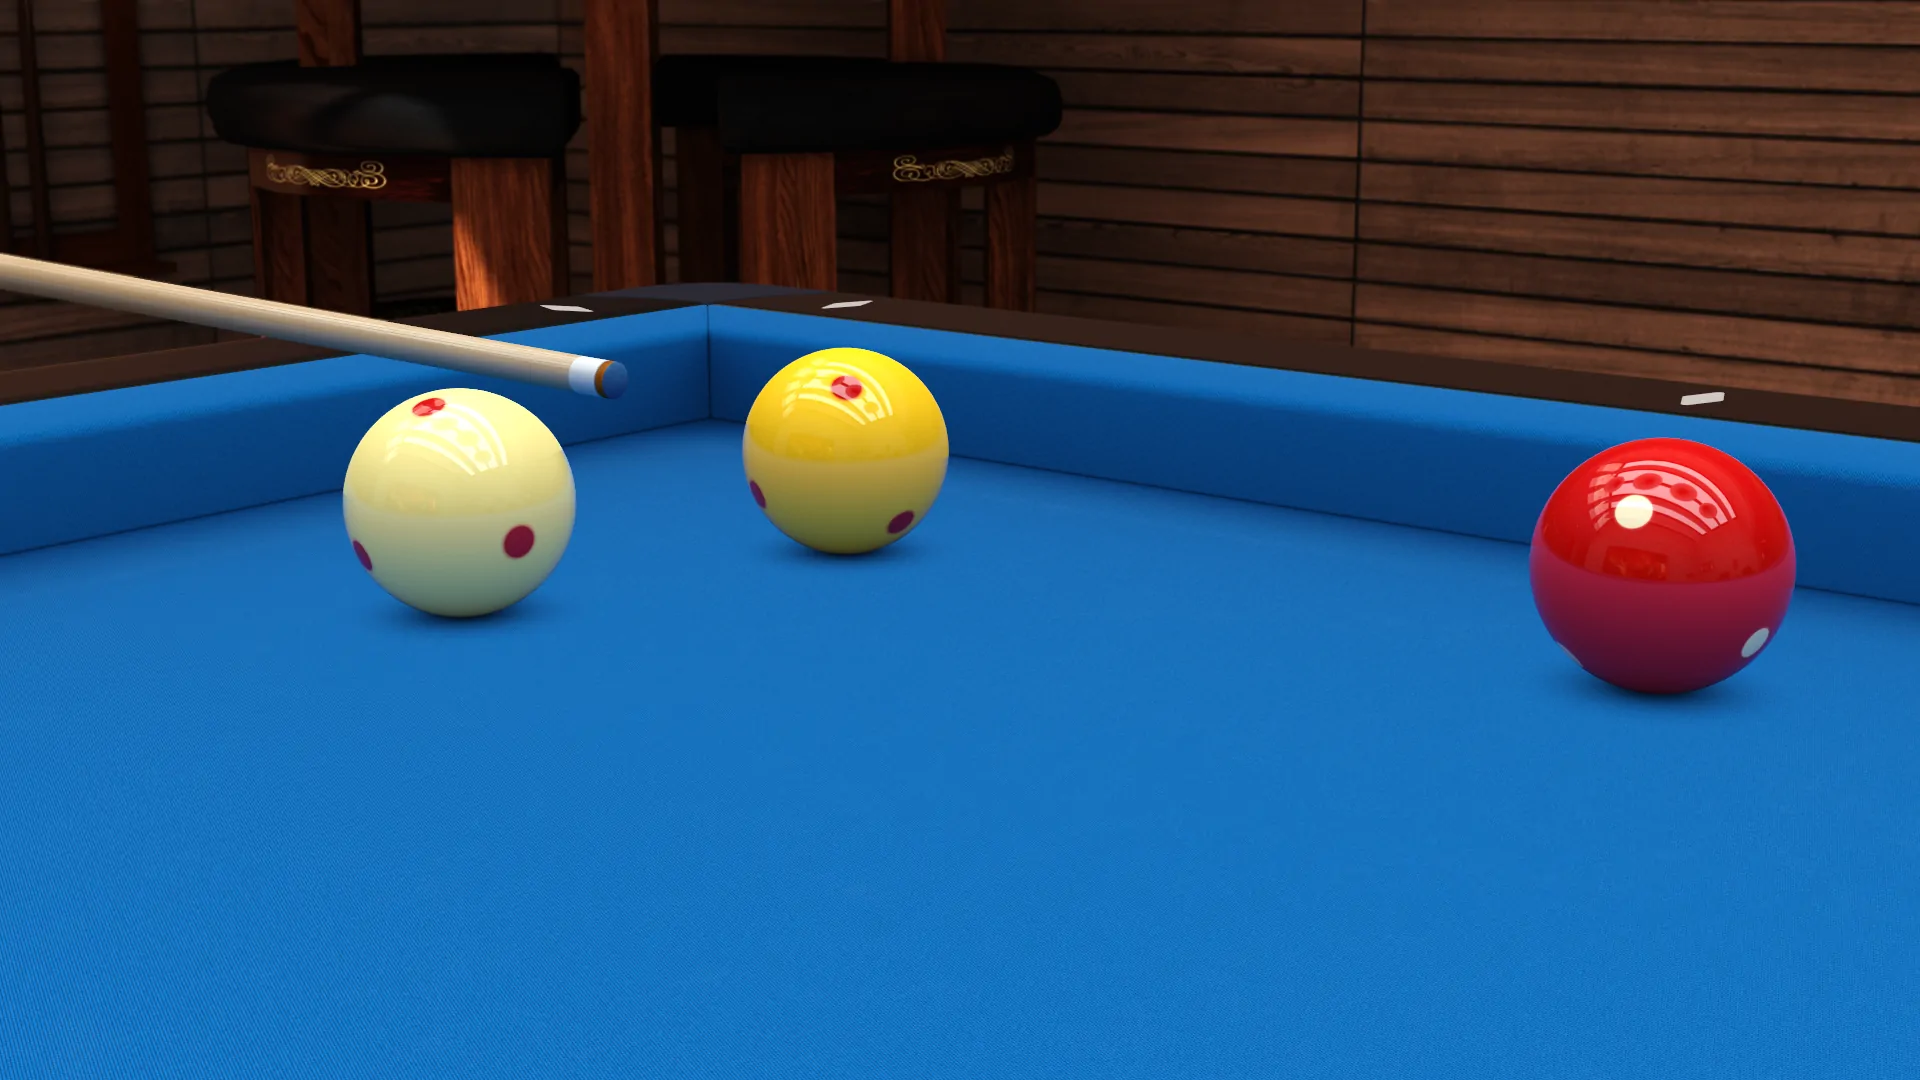 snooker pool online